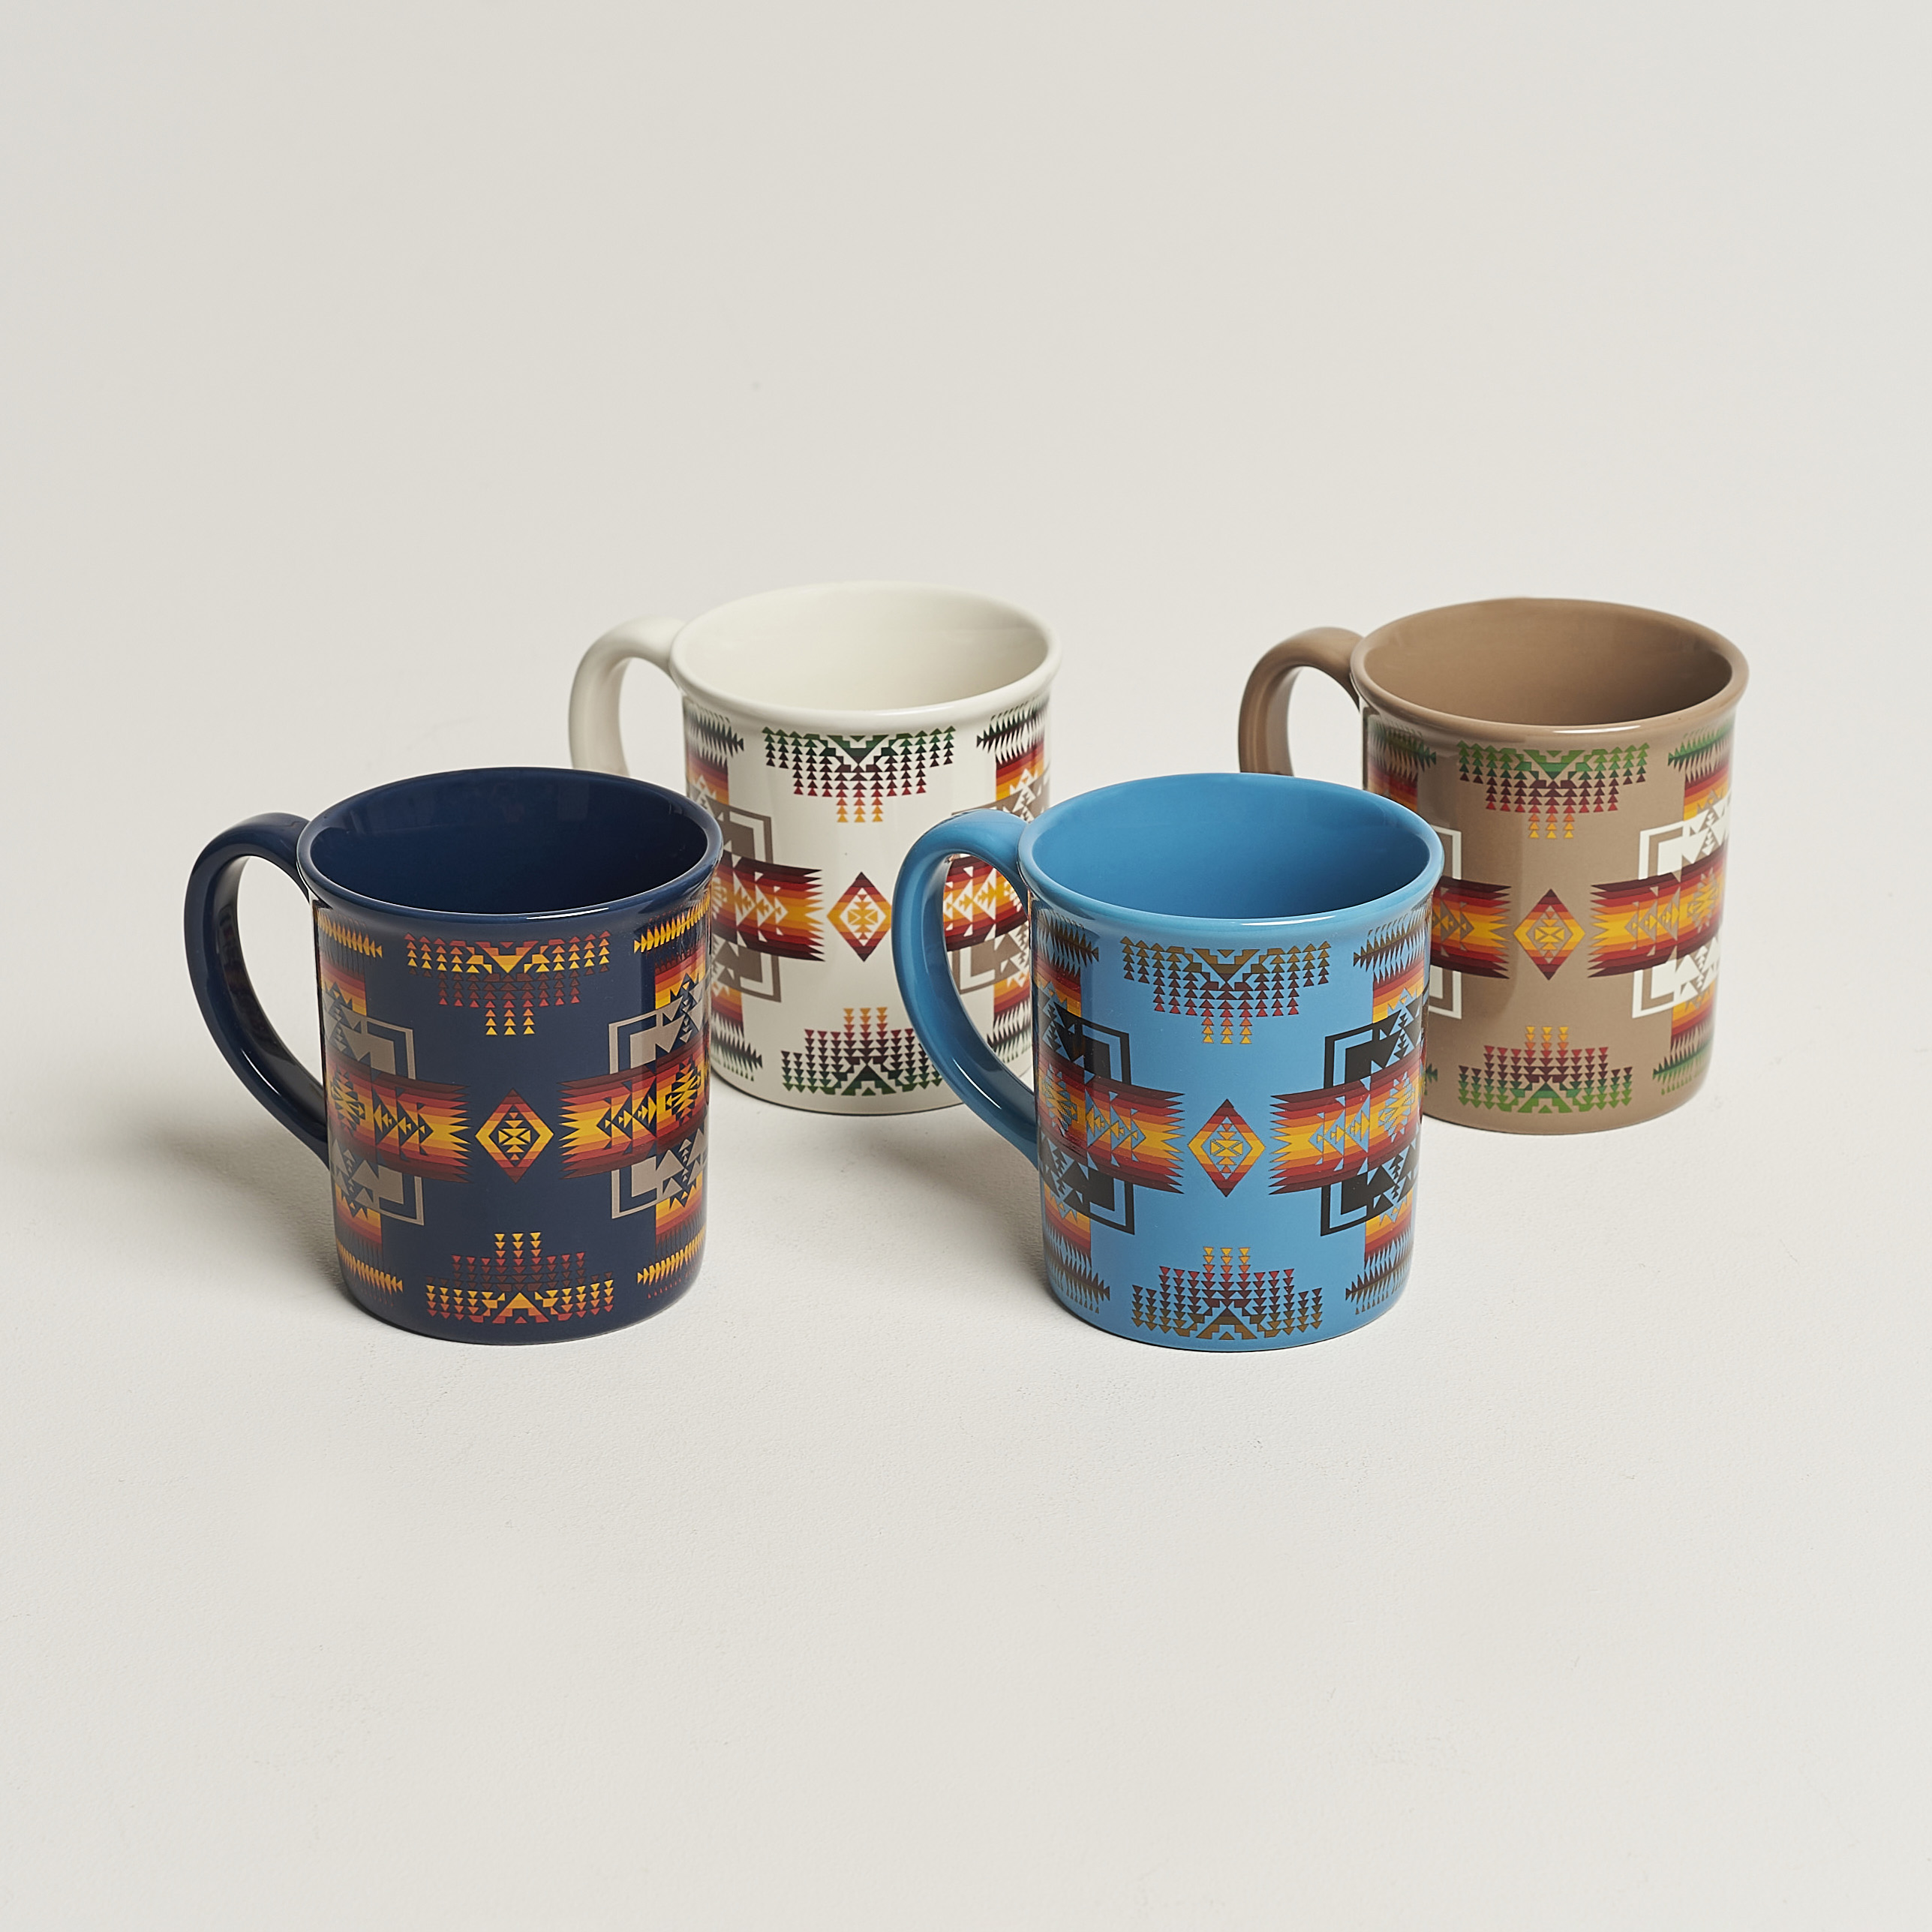 Pendleton Ceramic Mug Set 4-Pack Chief Joseph Mix at